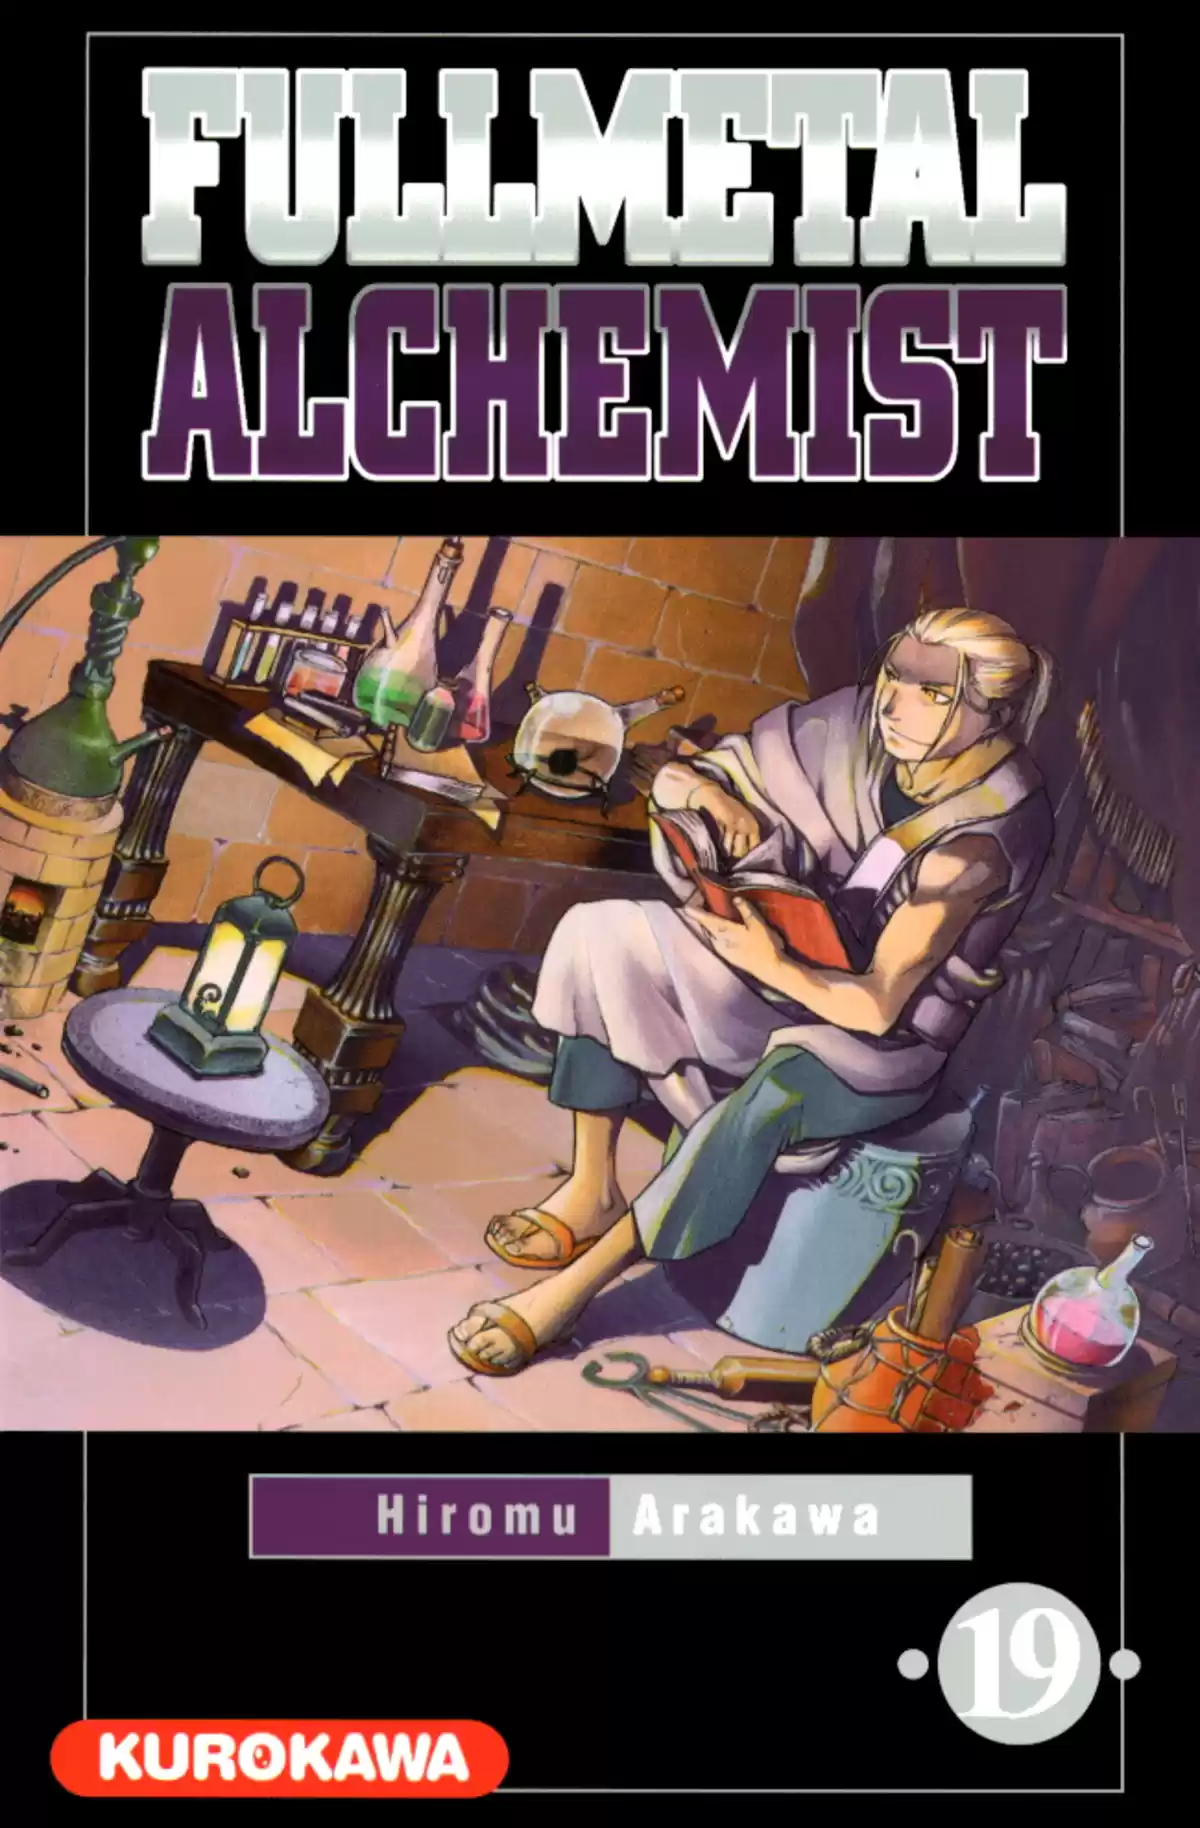 Fullmetal Alchemist Volume 19 page 1